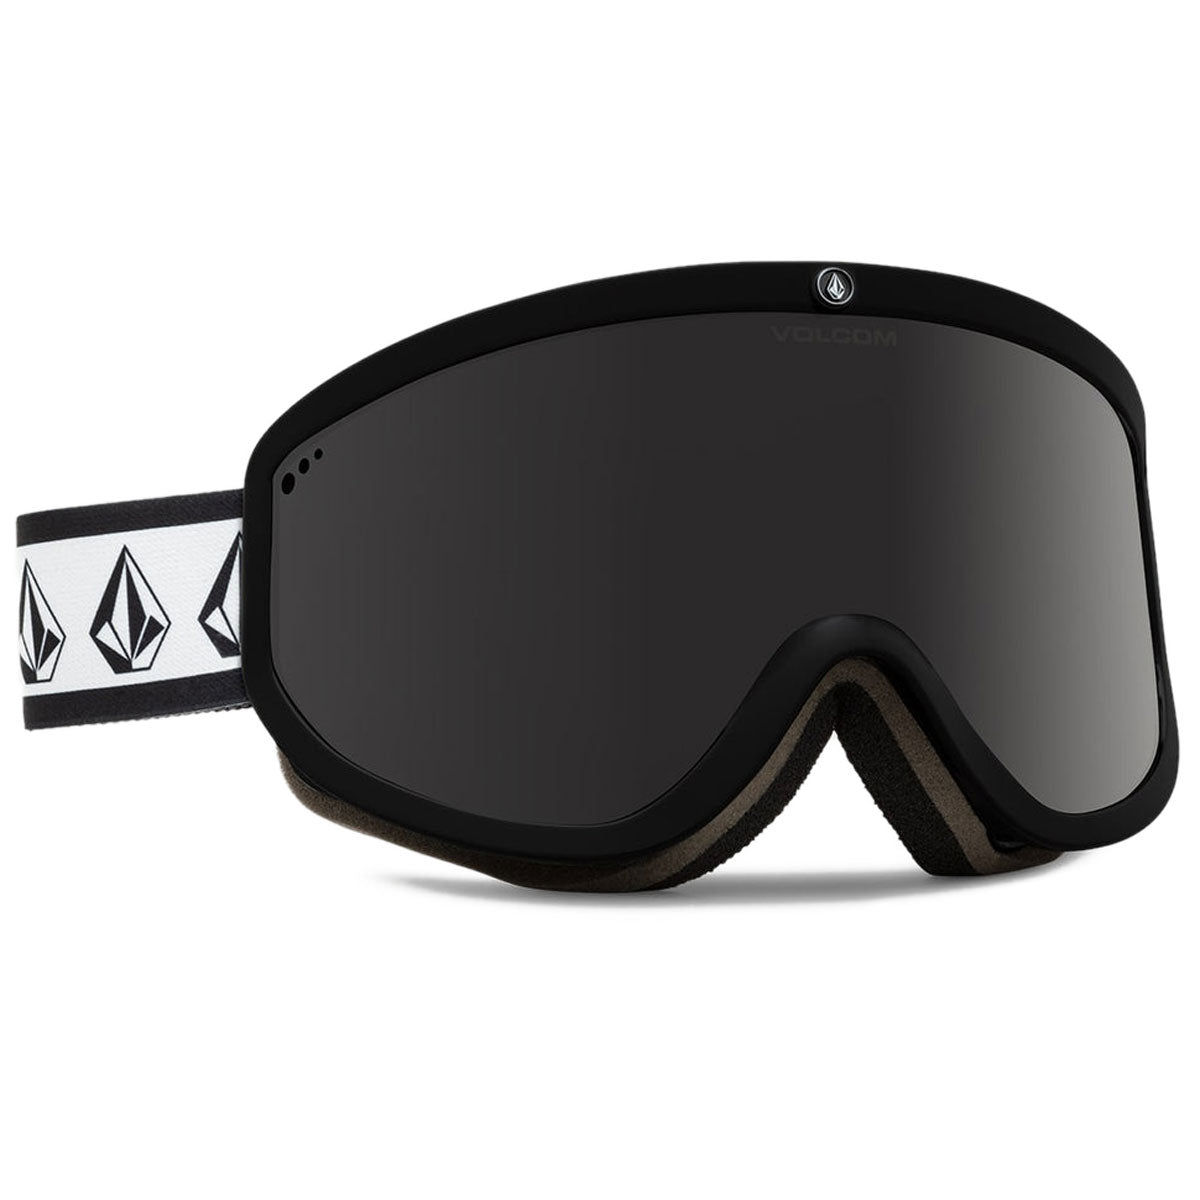 Volcom Footprints Snowboard Goggles - Black Rerun/Dark Grey image 3